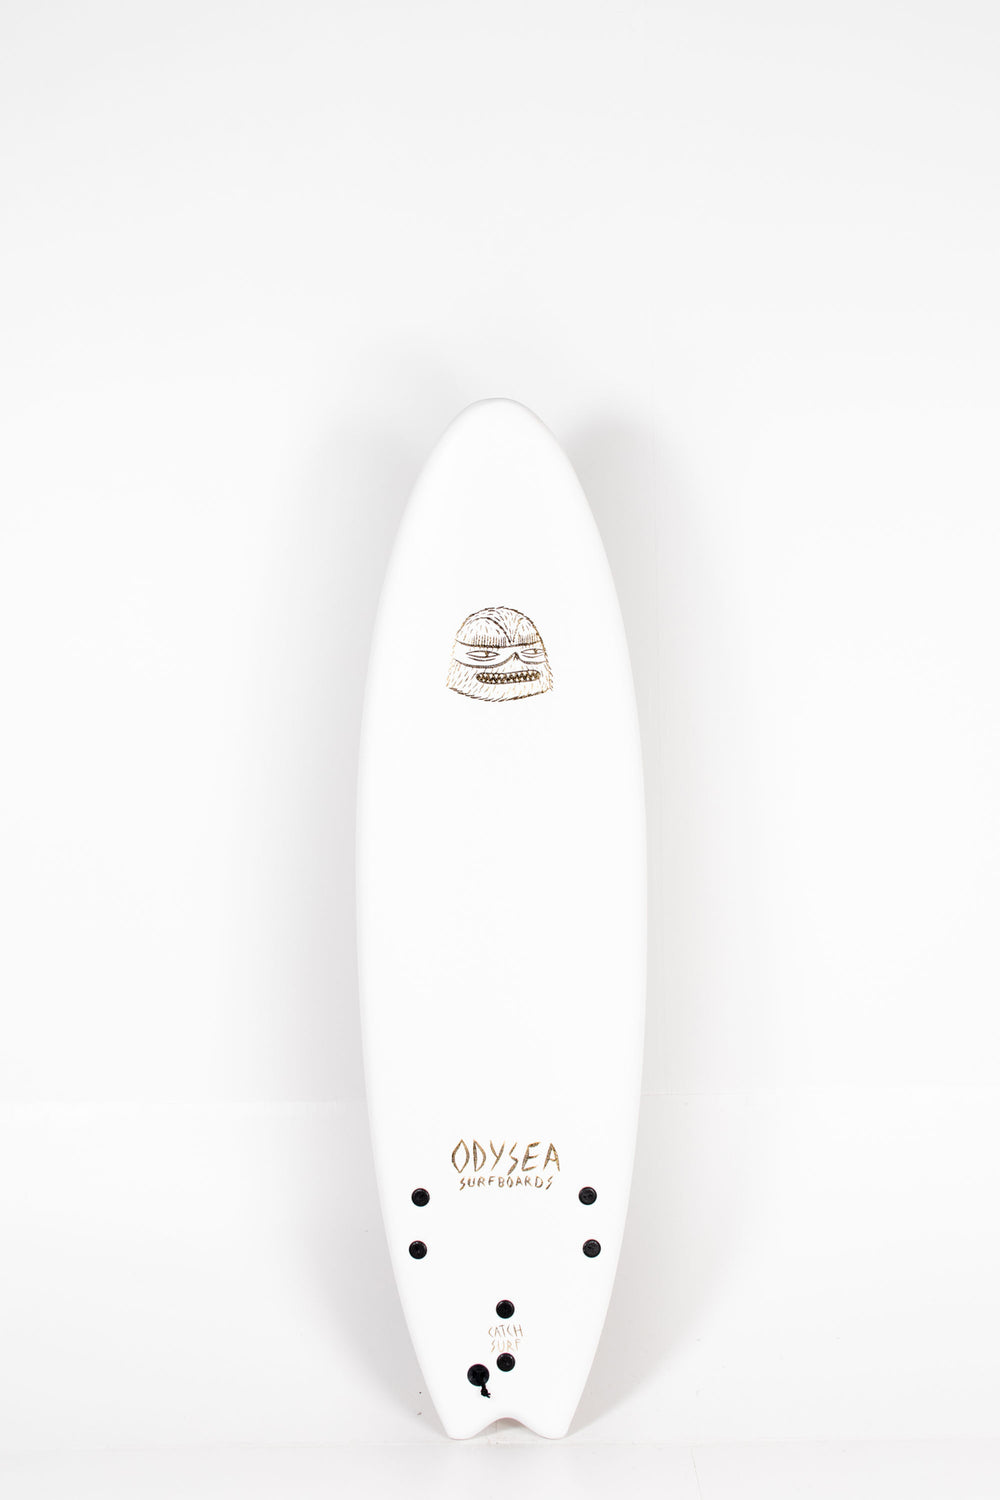 Pukas Surf Shop - Catch Surf - ODYSEA 66 SKIPPER THRUSTER x EVAN ROSSELL PRO - 6'6